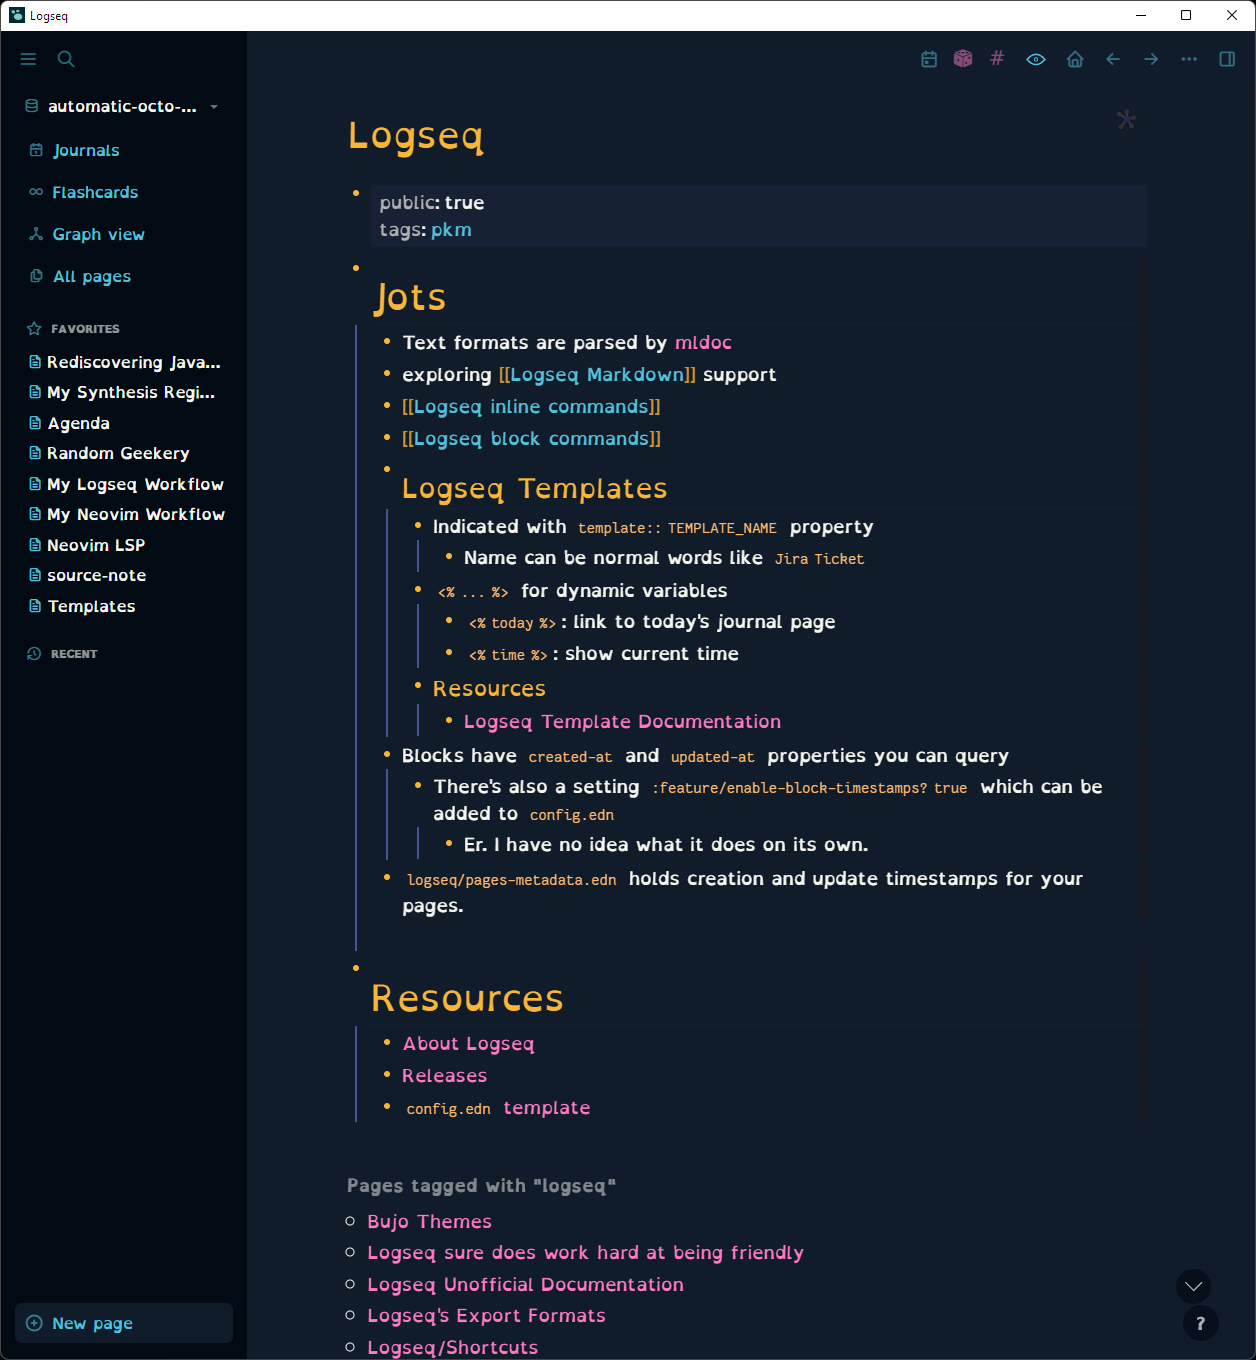 Screenshot of my Logseq page in Logseq with custom style